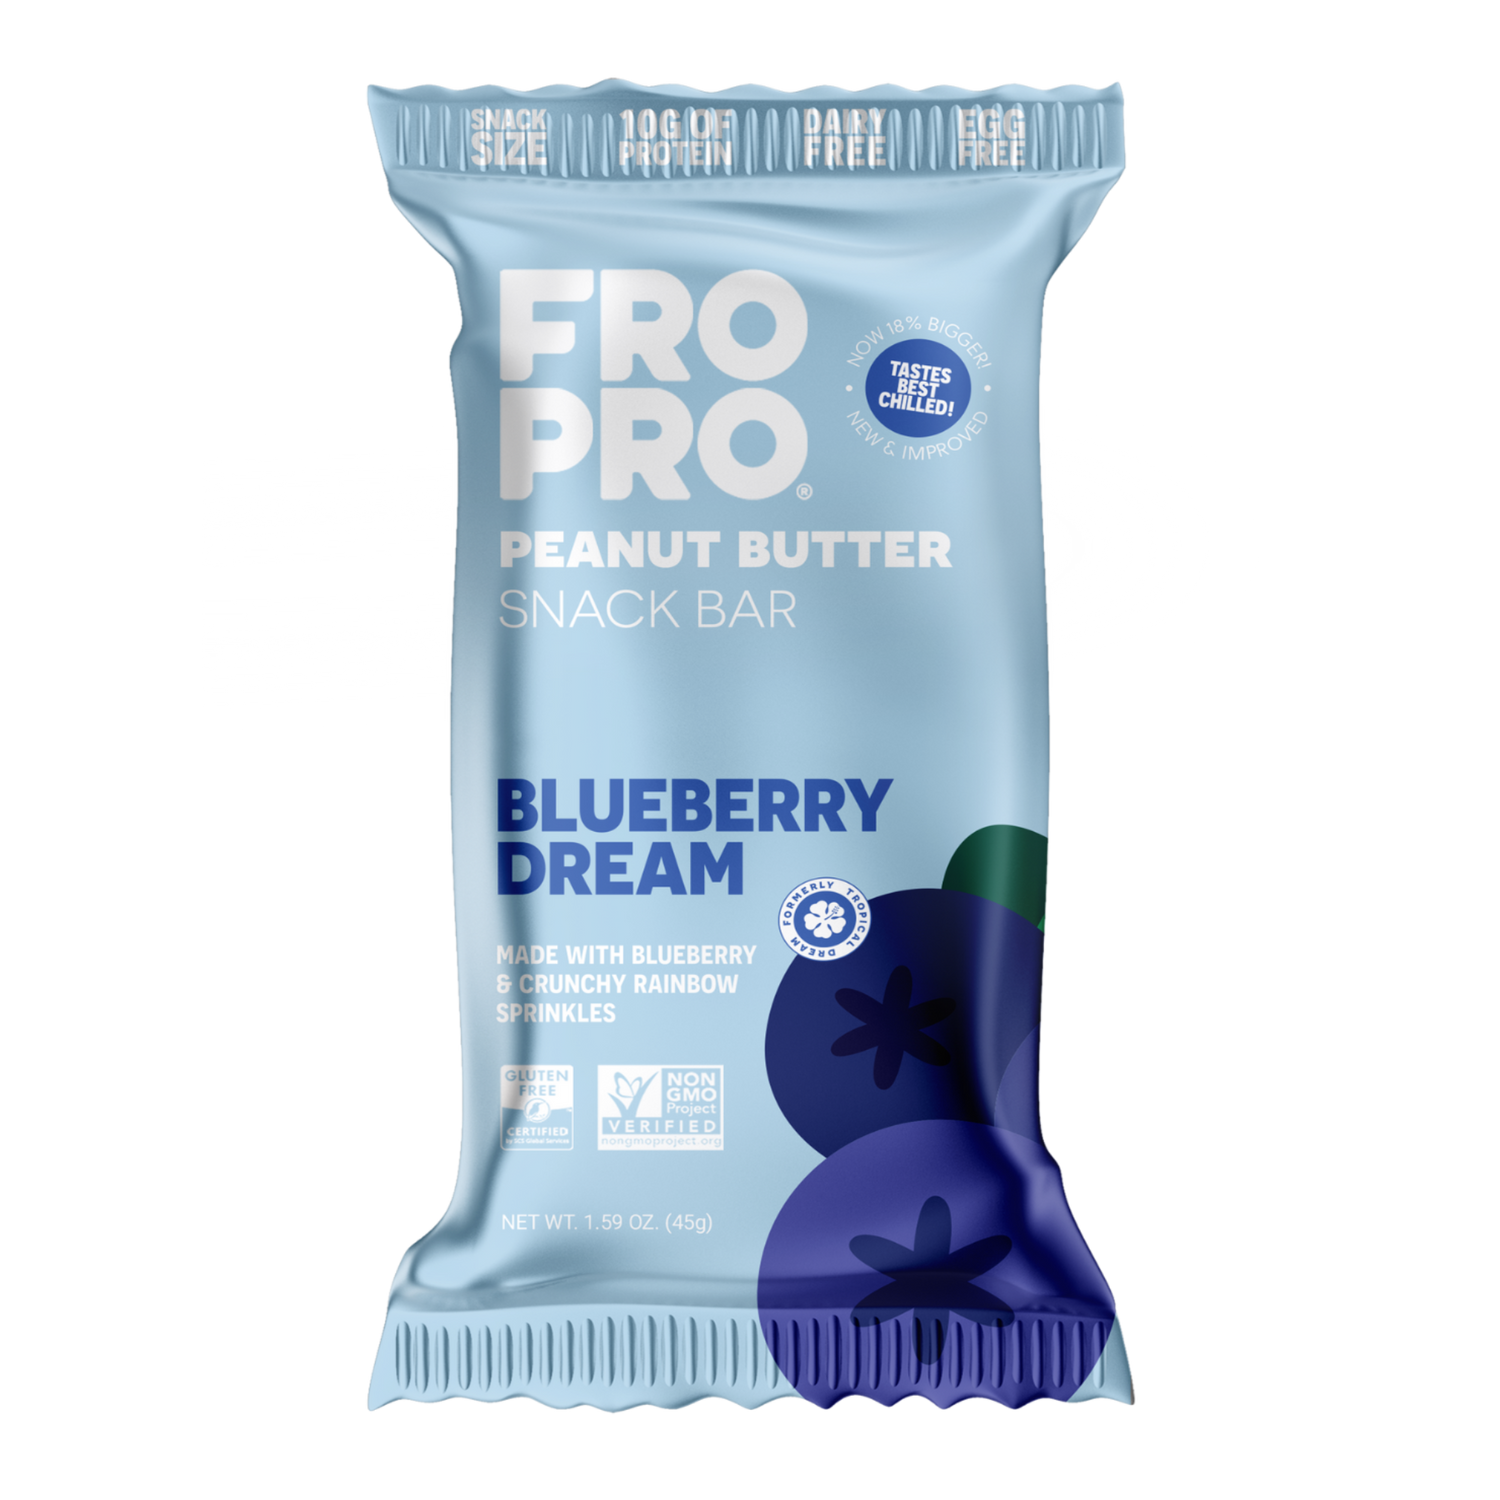 Blueberry Dream